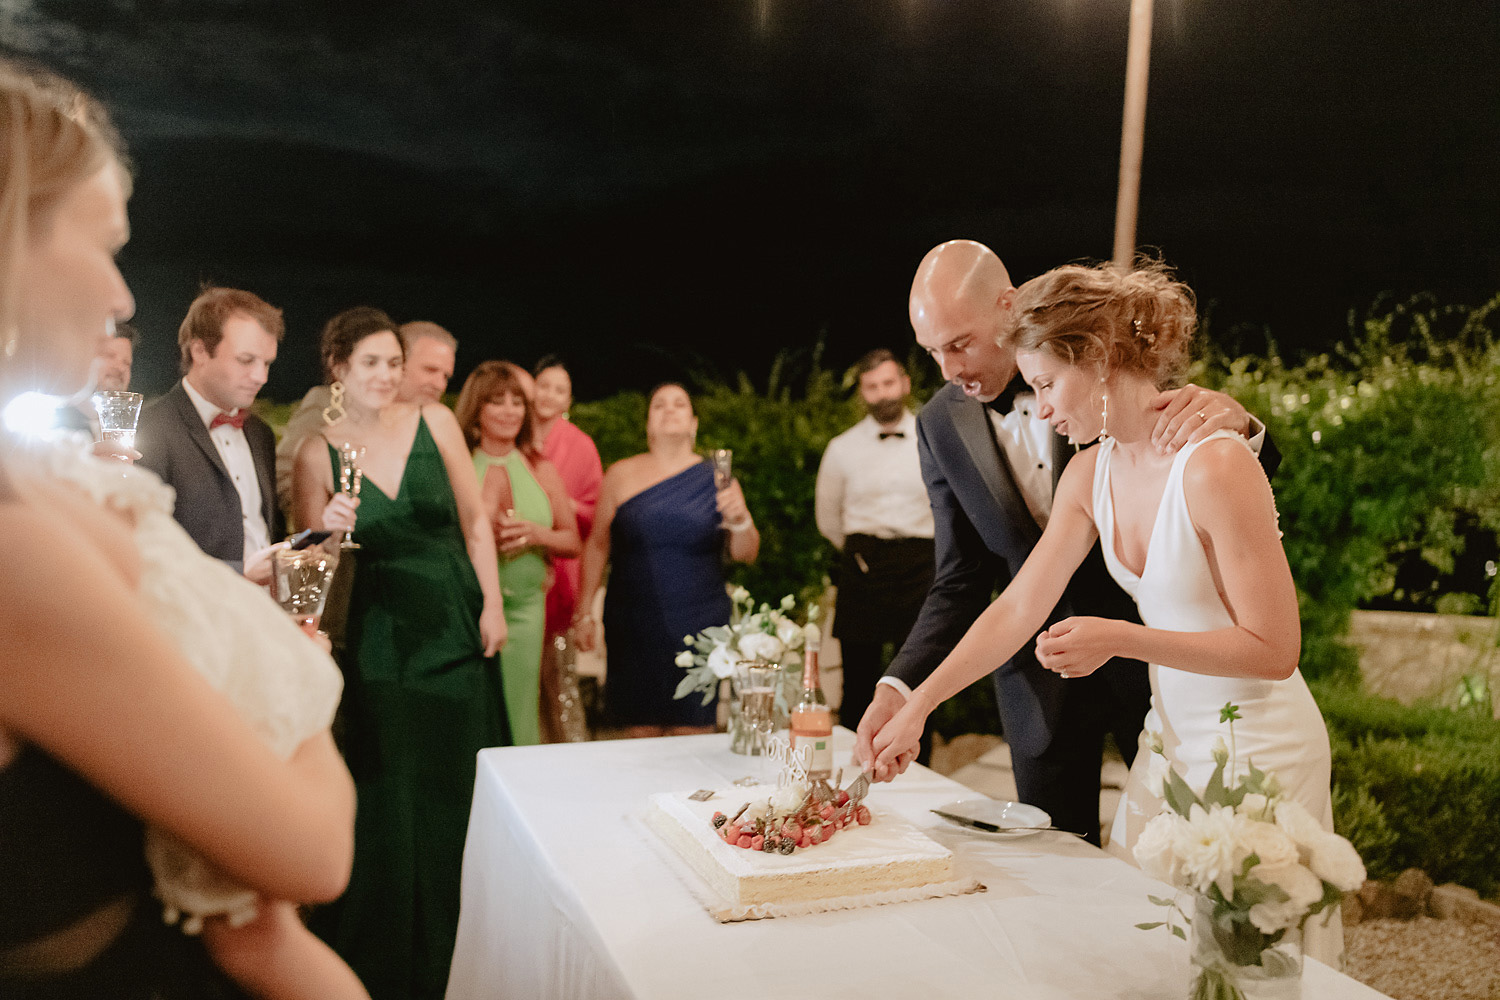 editiorial intimate micro wedding in tuscany alfresco dinner cake cutting